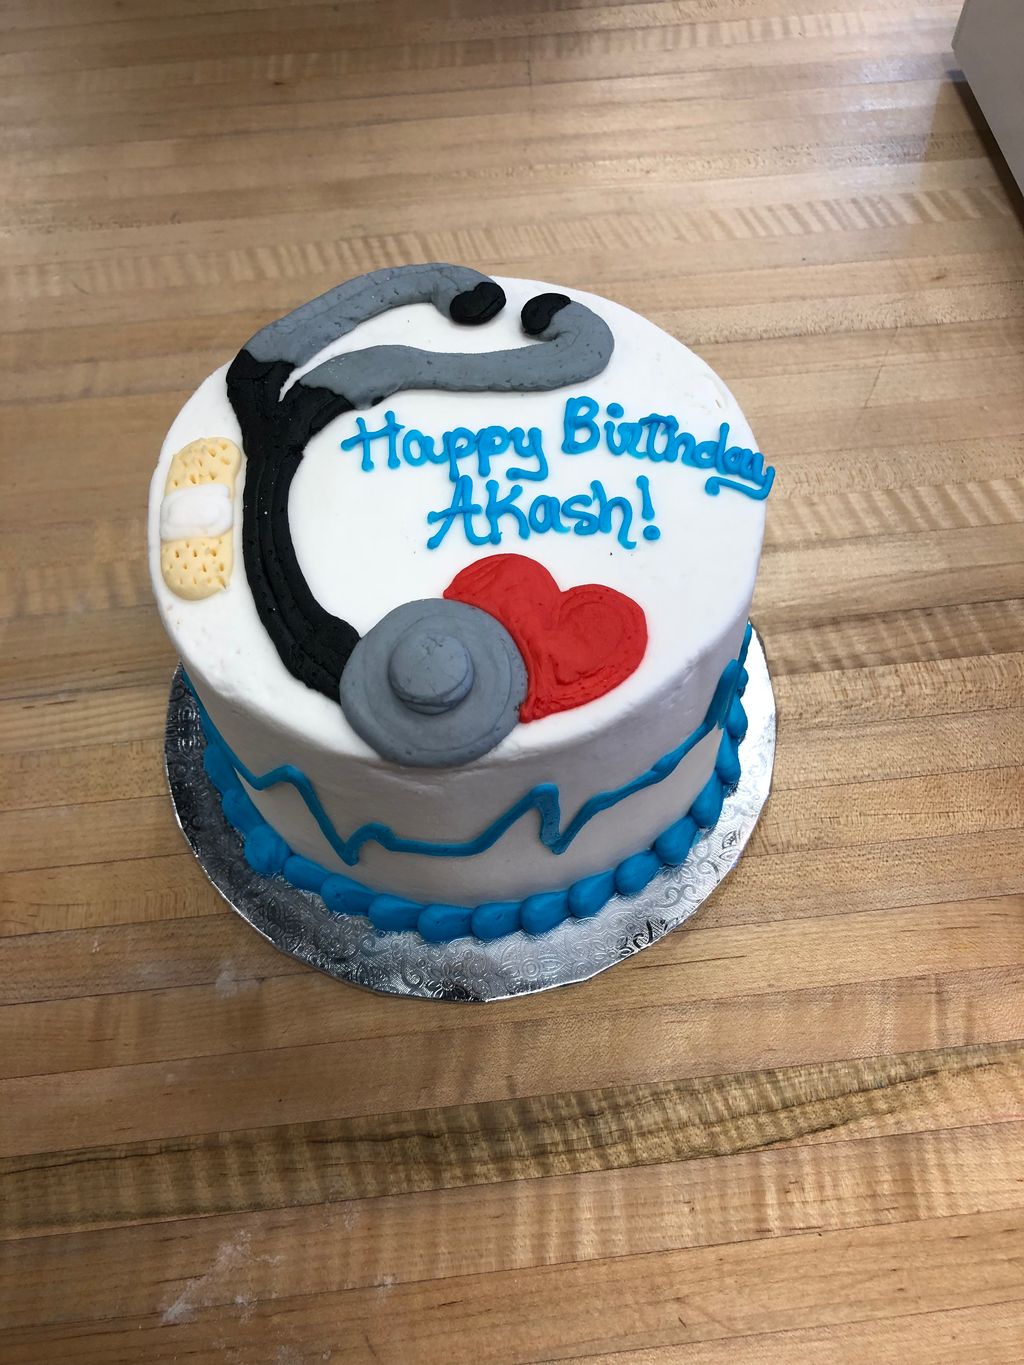 Adult Birthday Cakes in Arlington TX | Birthday Cakes Near Me